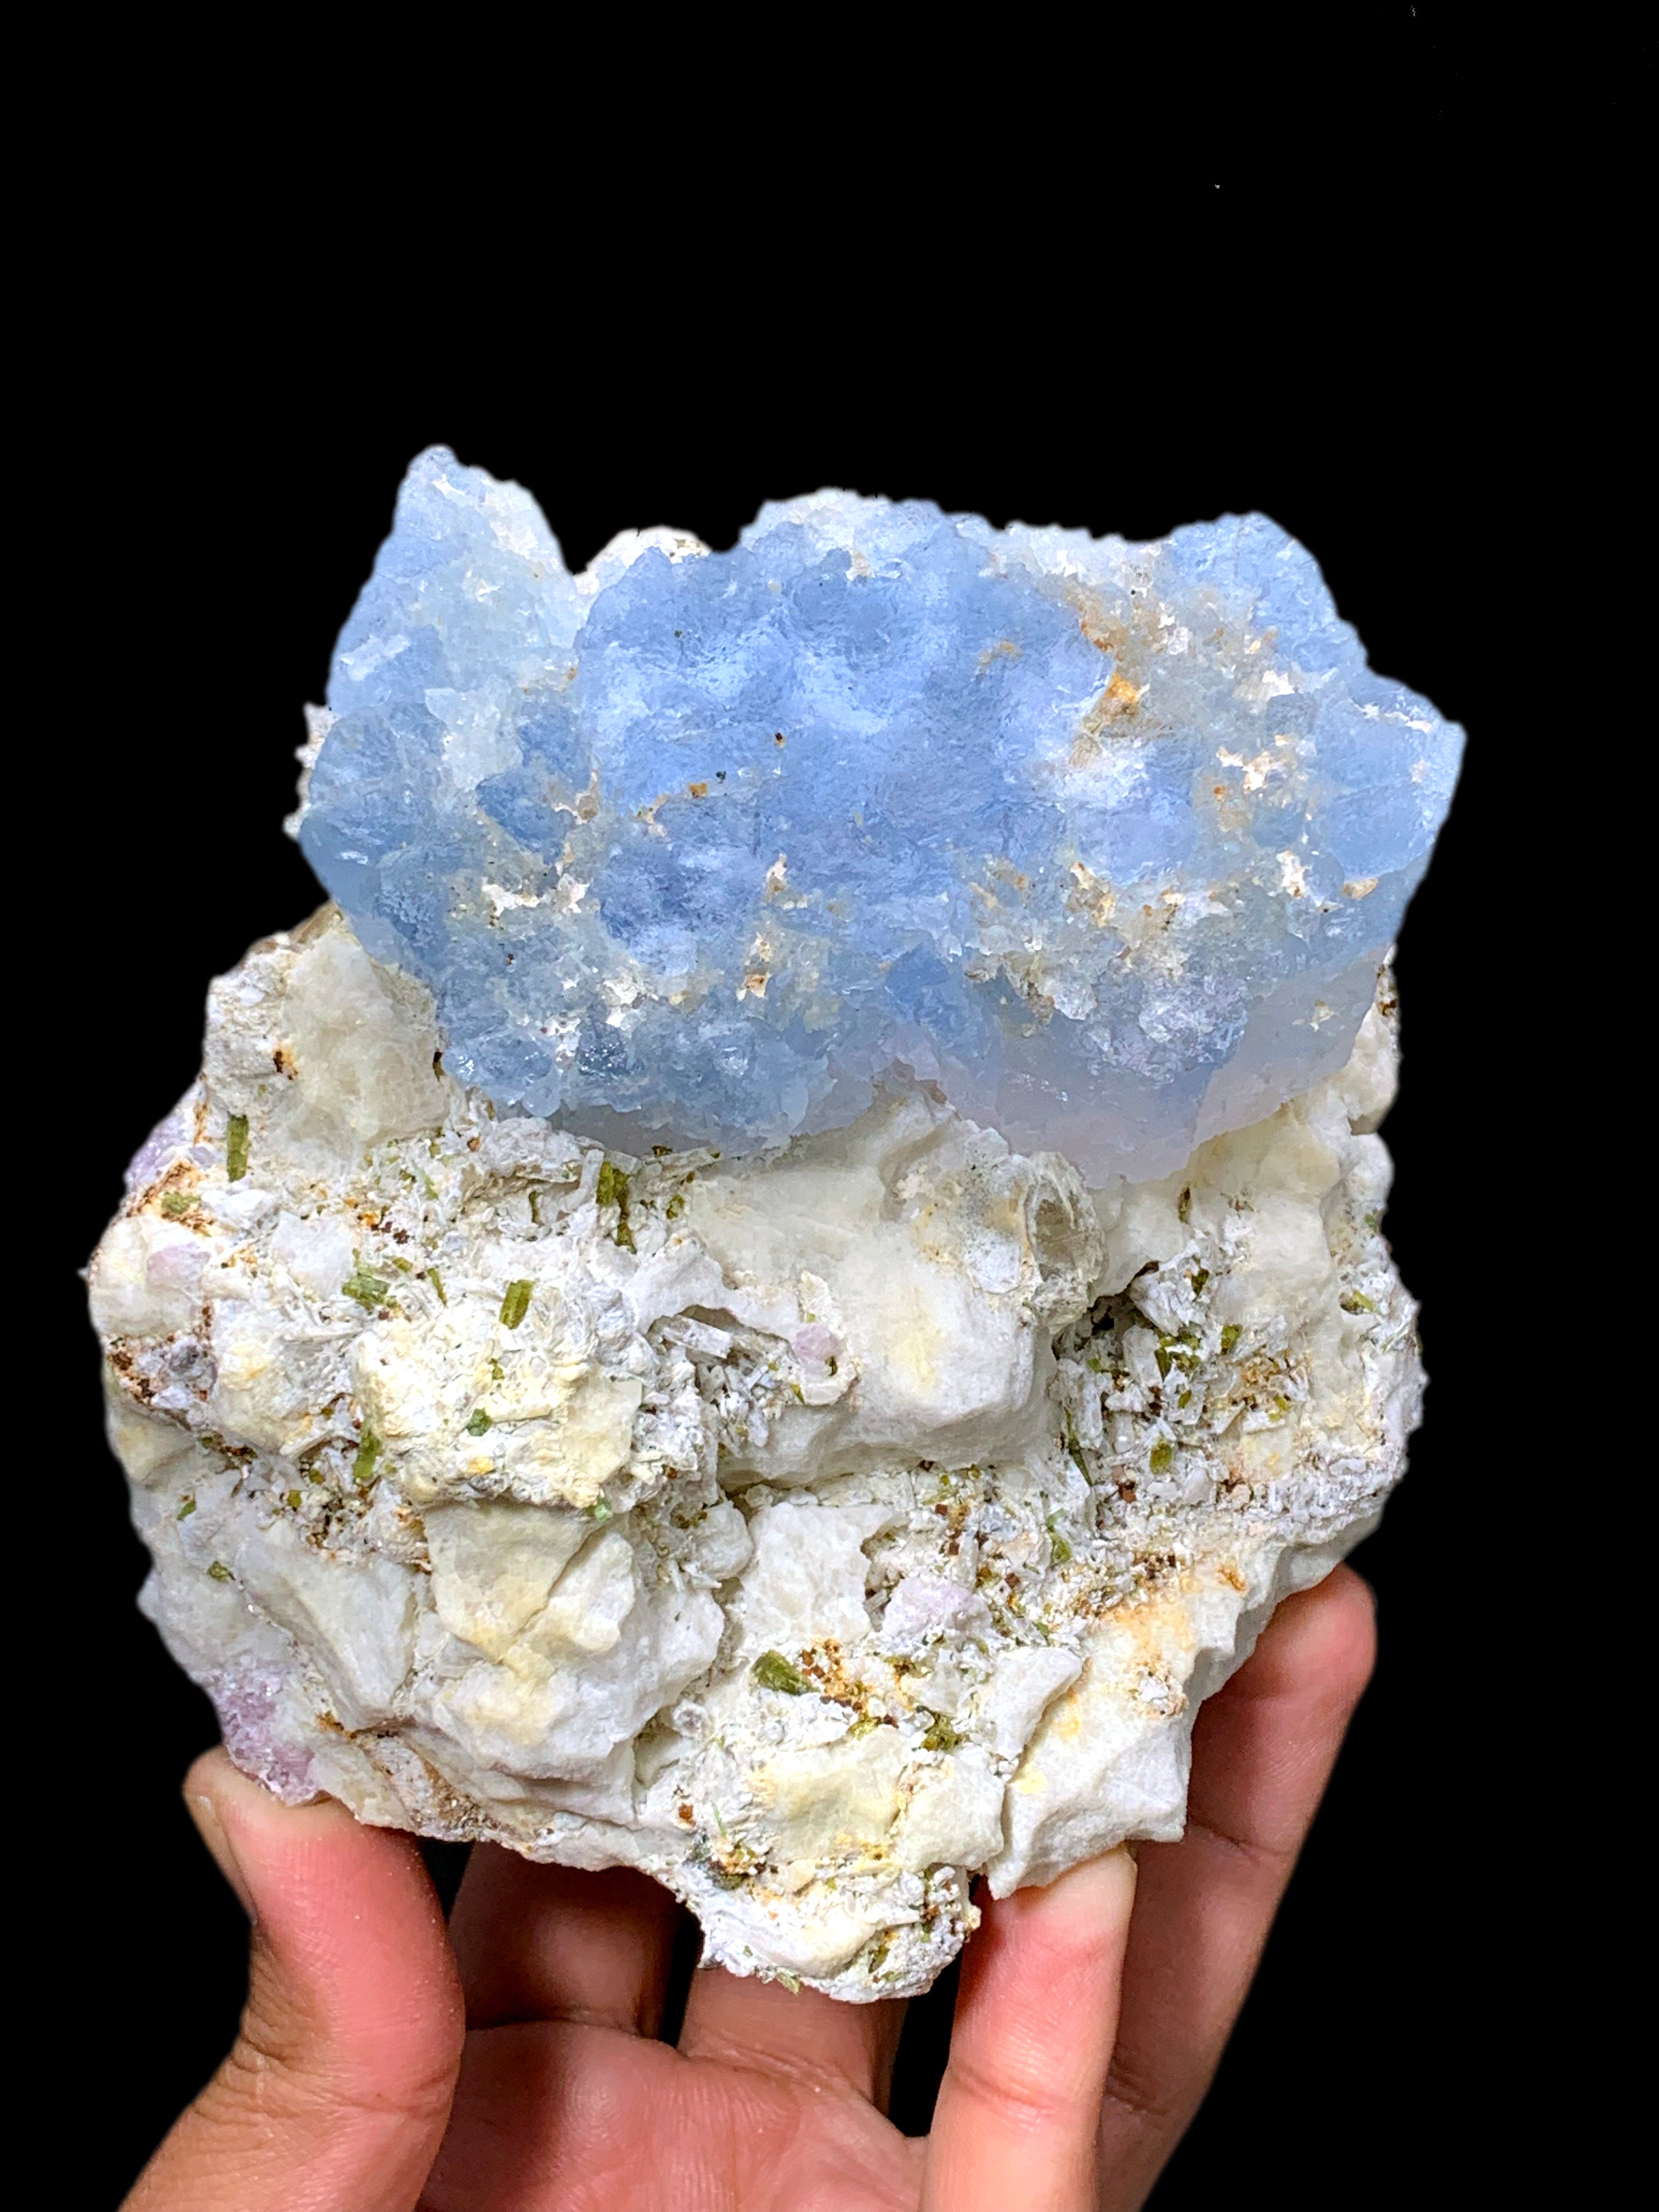 Natural Bicolor Beryl, AquaMorganite, Blue Aquamarine and Pink Morganite with Tourmalines, Tantalite on Matrix, Mineral Specimen - 1448 g